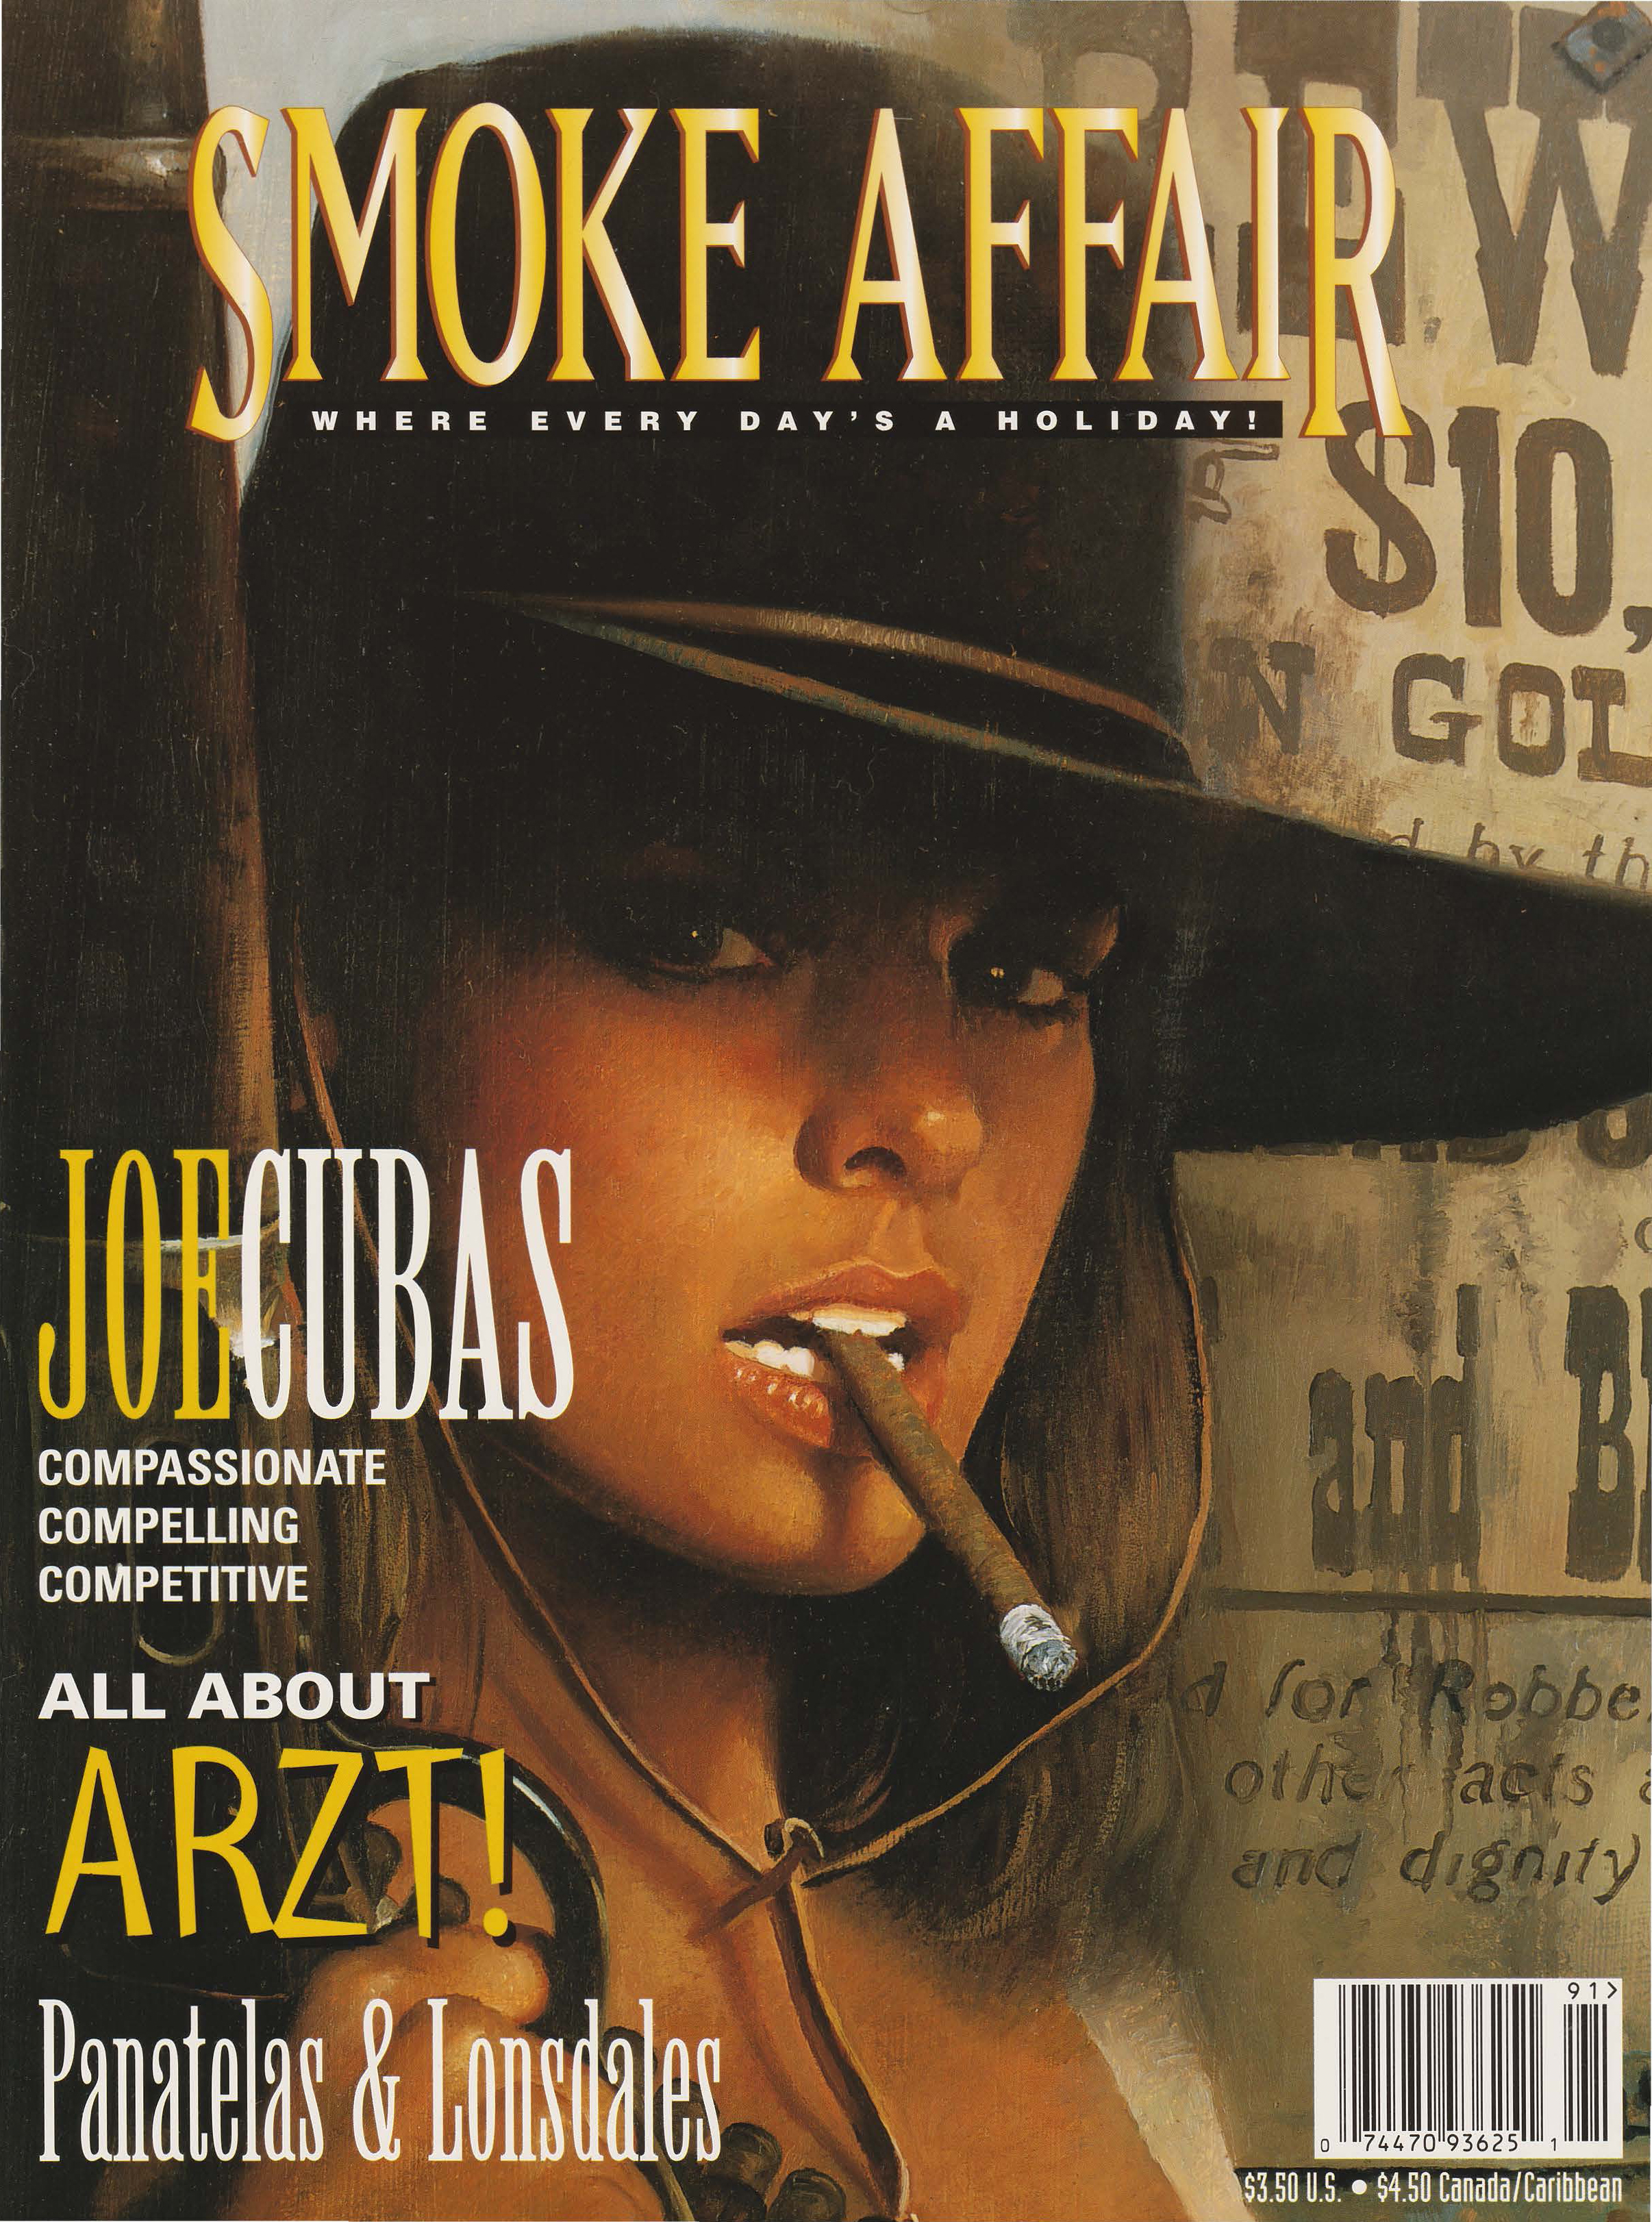 Smoke Affair cover art by Ron Lesser - c2003